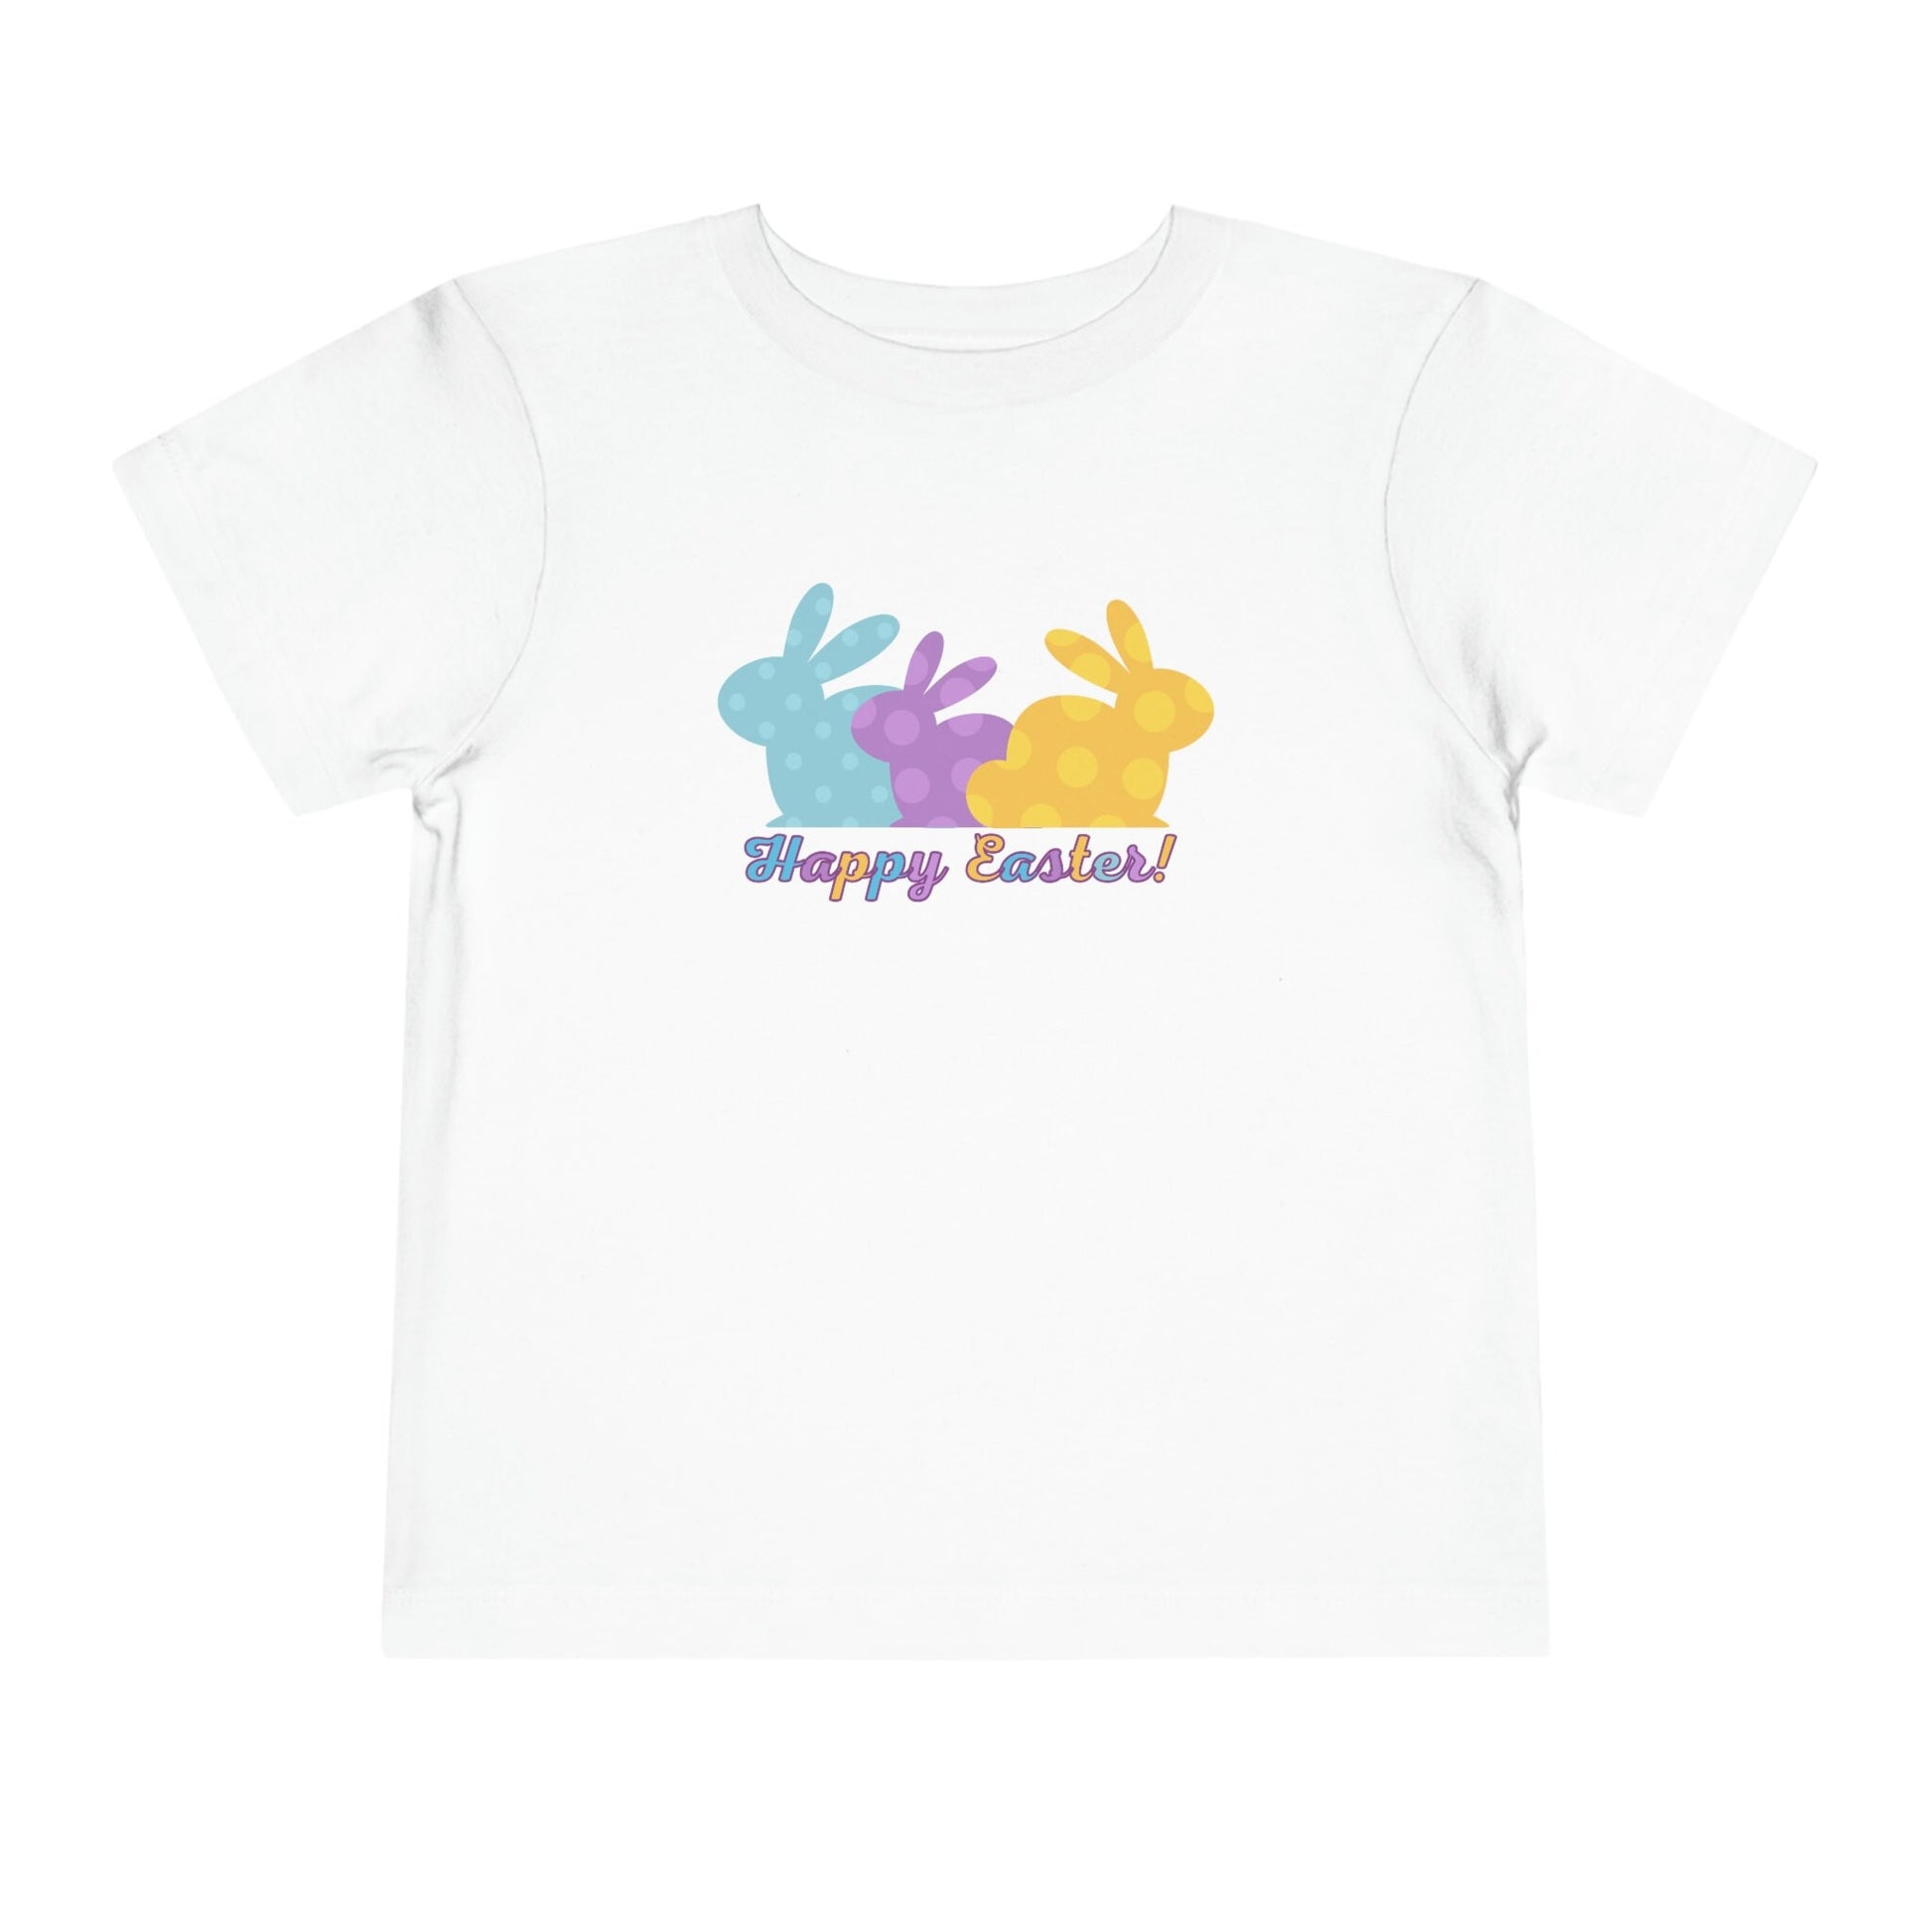 Easter Kids Shirt, Cute Easter Shirt, Rabbit Shirts, Easter Day Gift,Gift For Easter, Toddler Easter Shirt, Happy Easter Shirt